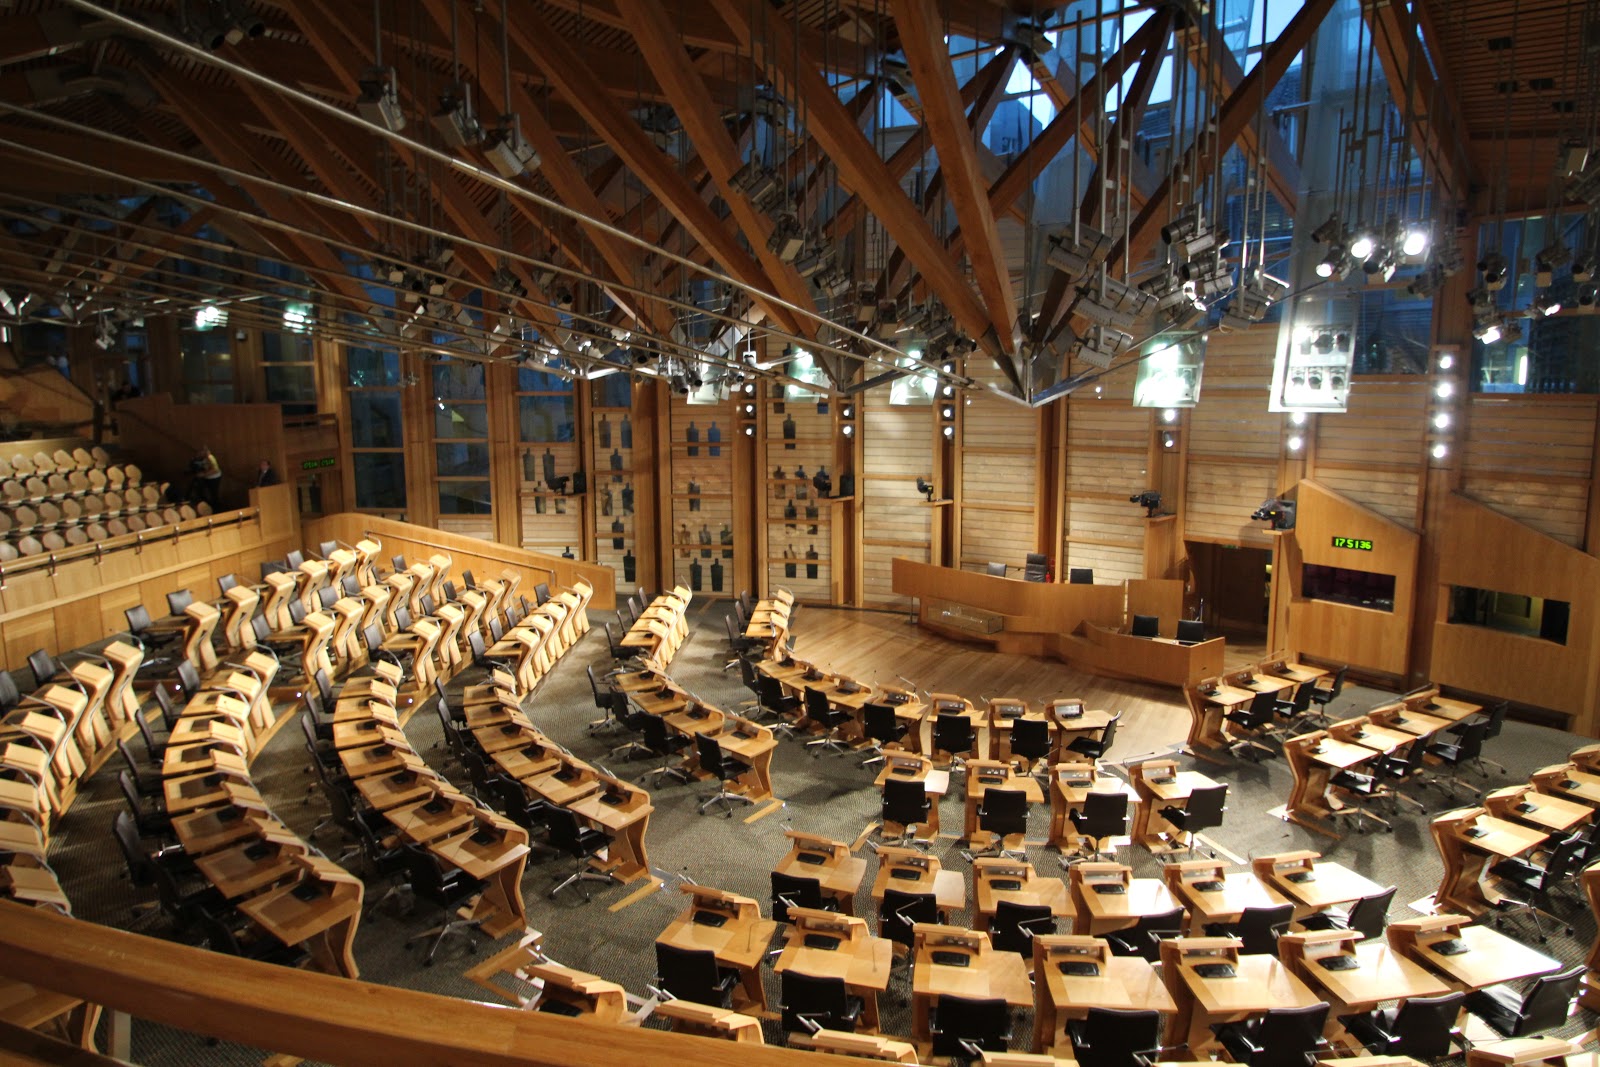 Single parliamentary chamber